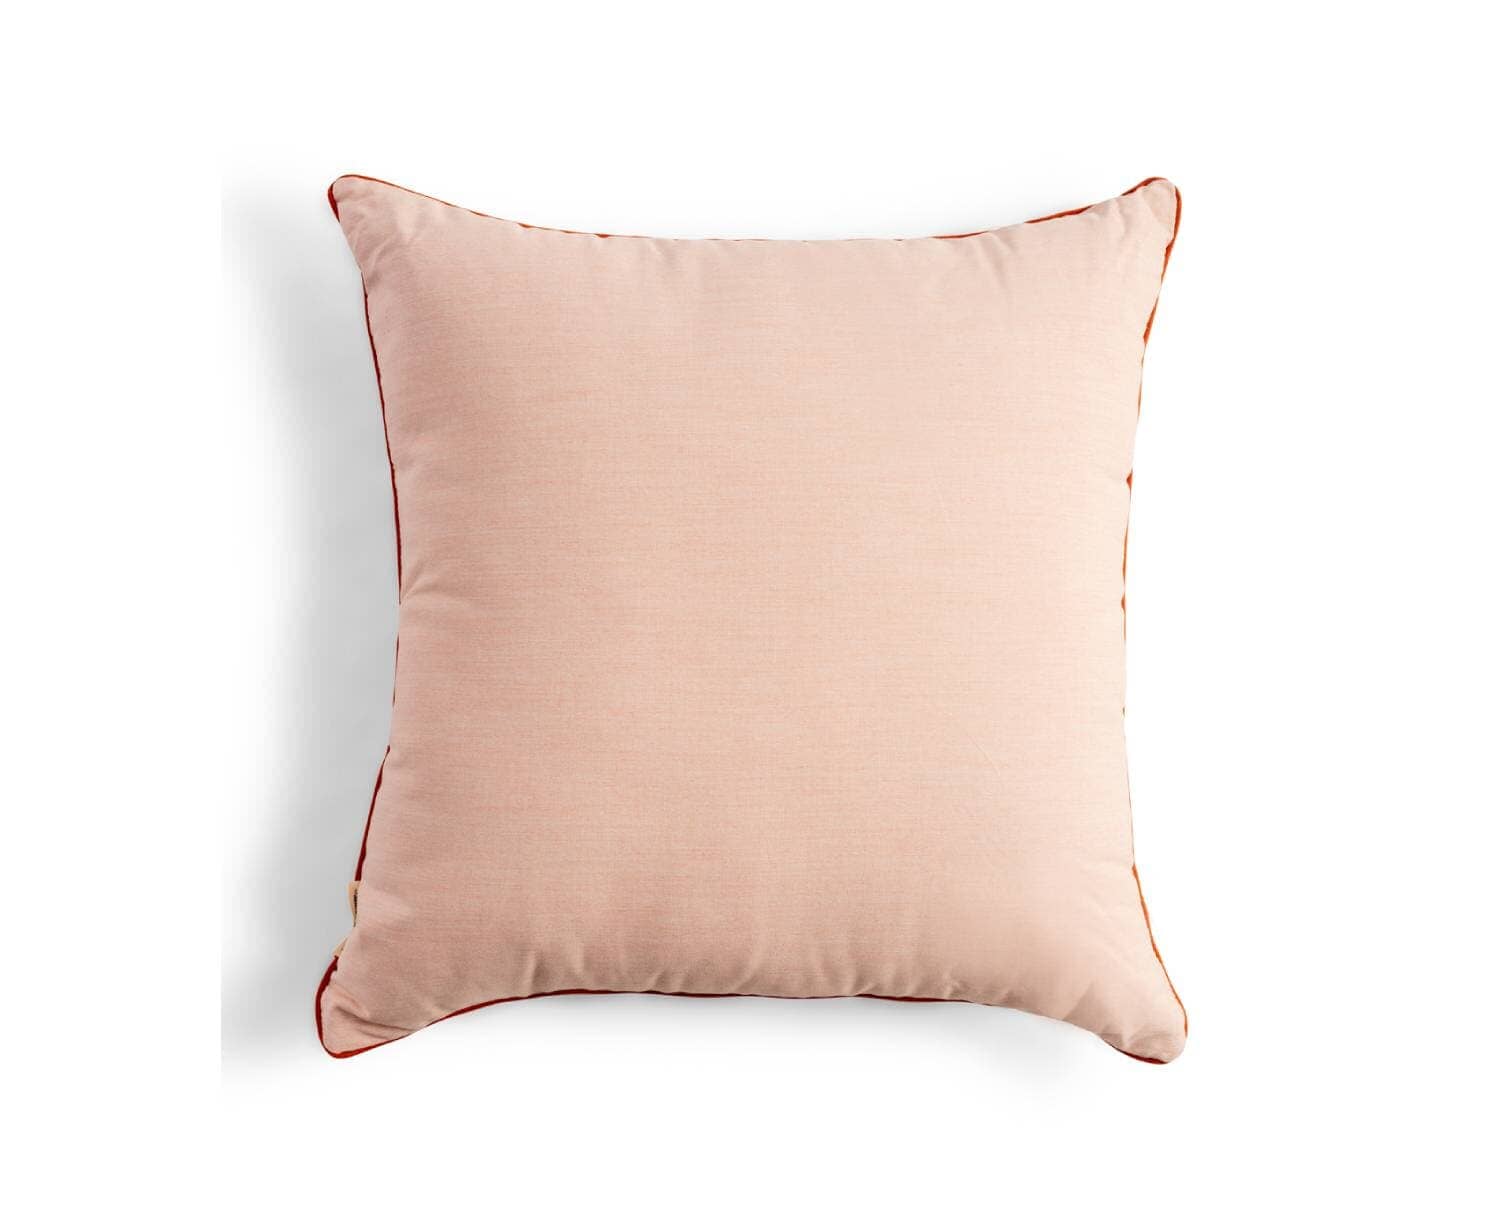 The Euro Throw Pillow - Rivie Pink